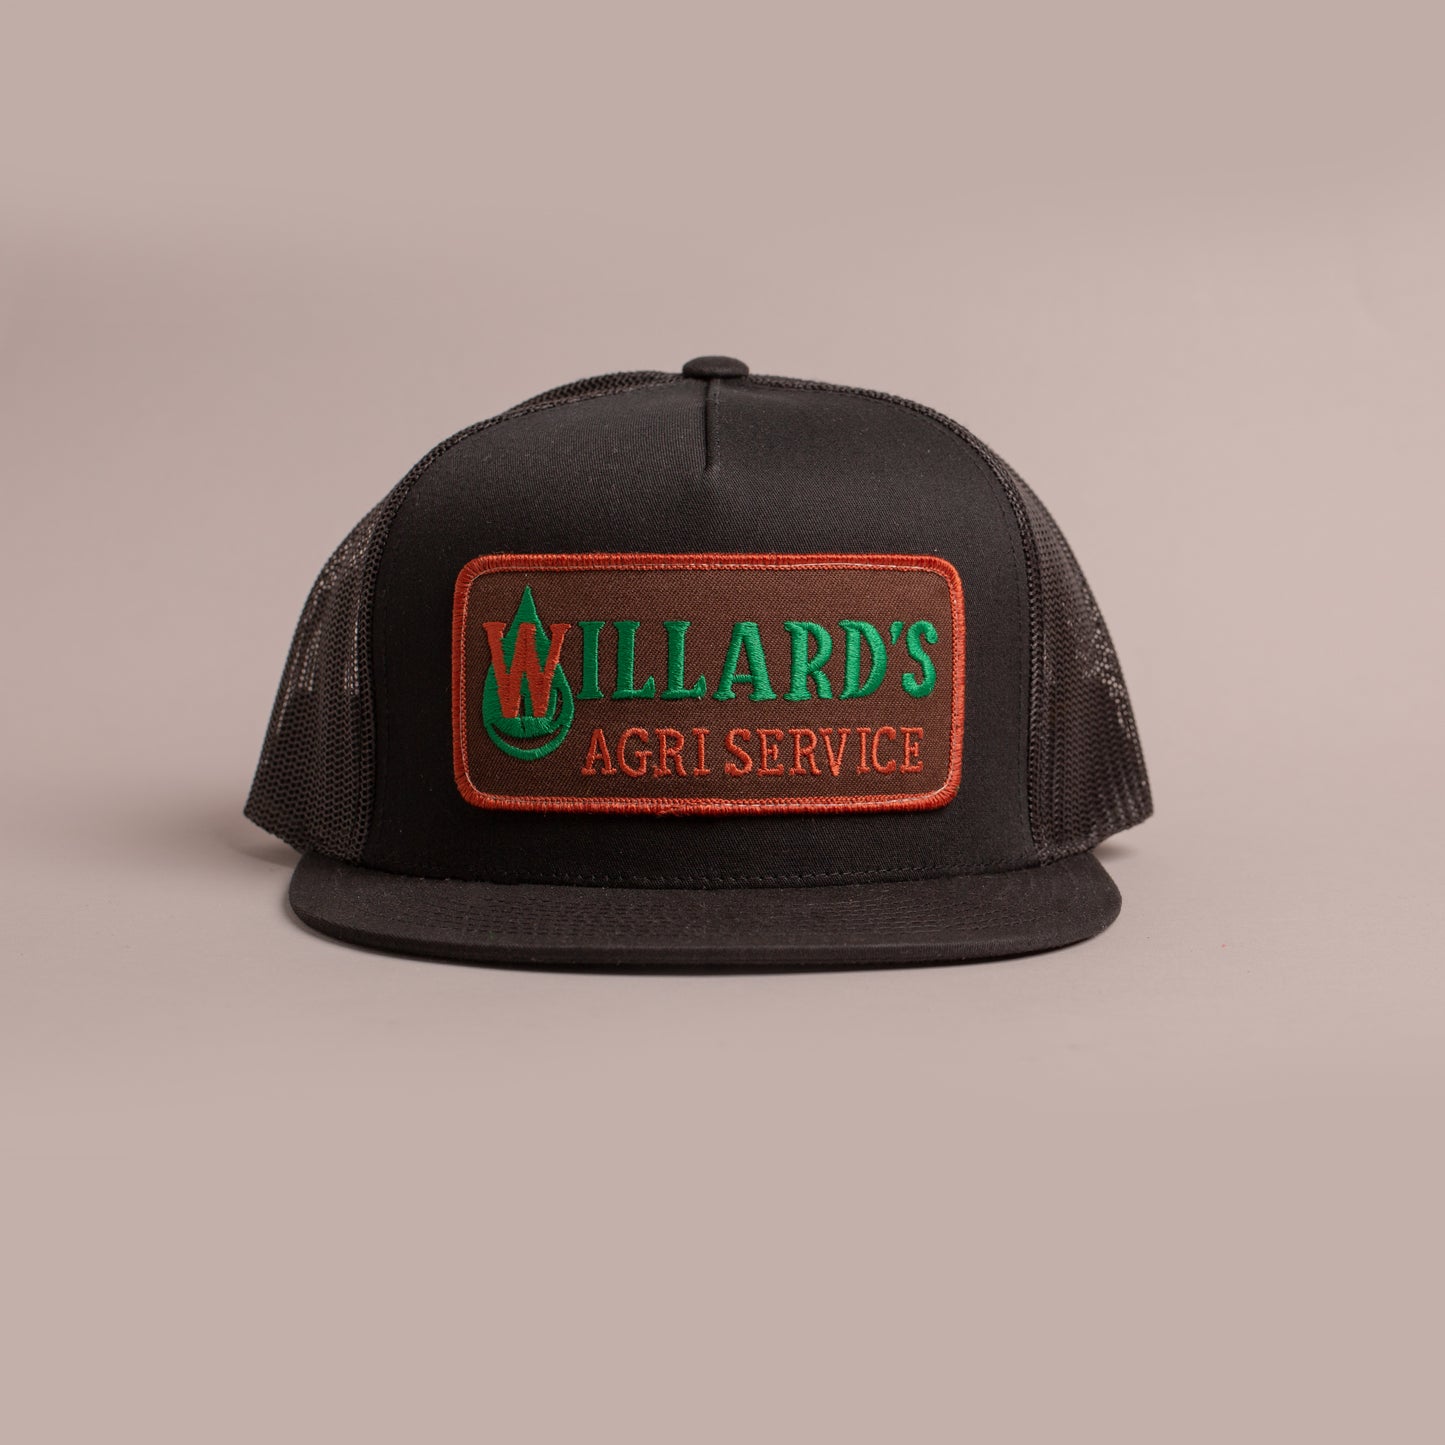 Willard's Agri Service